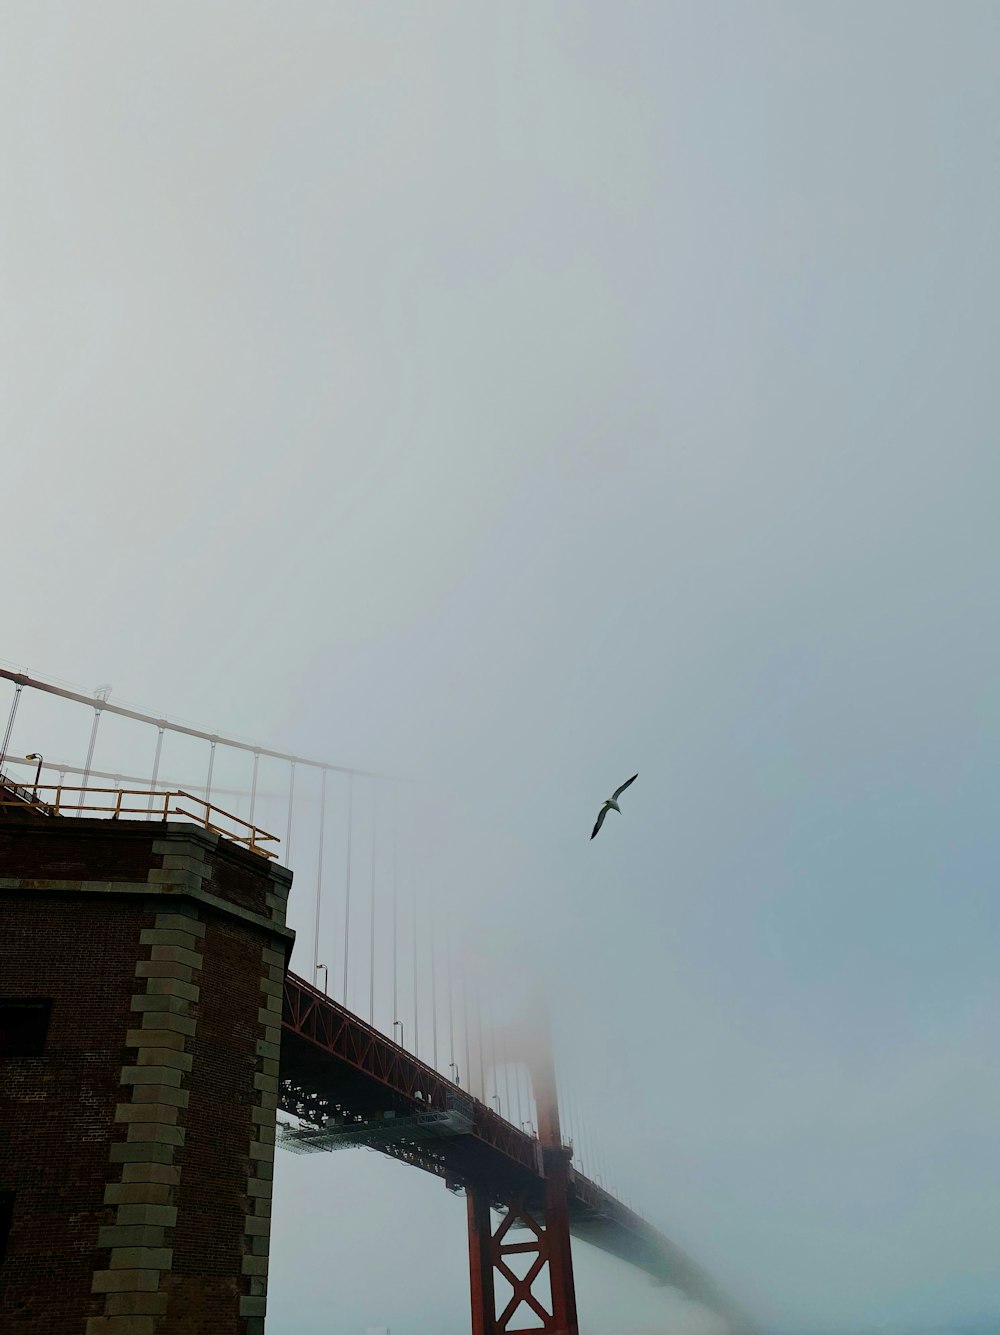 bird flying over the bridge